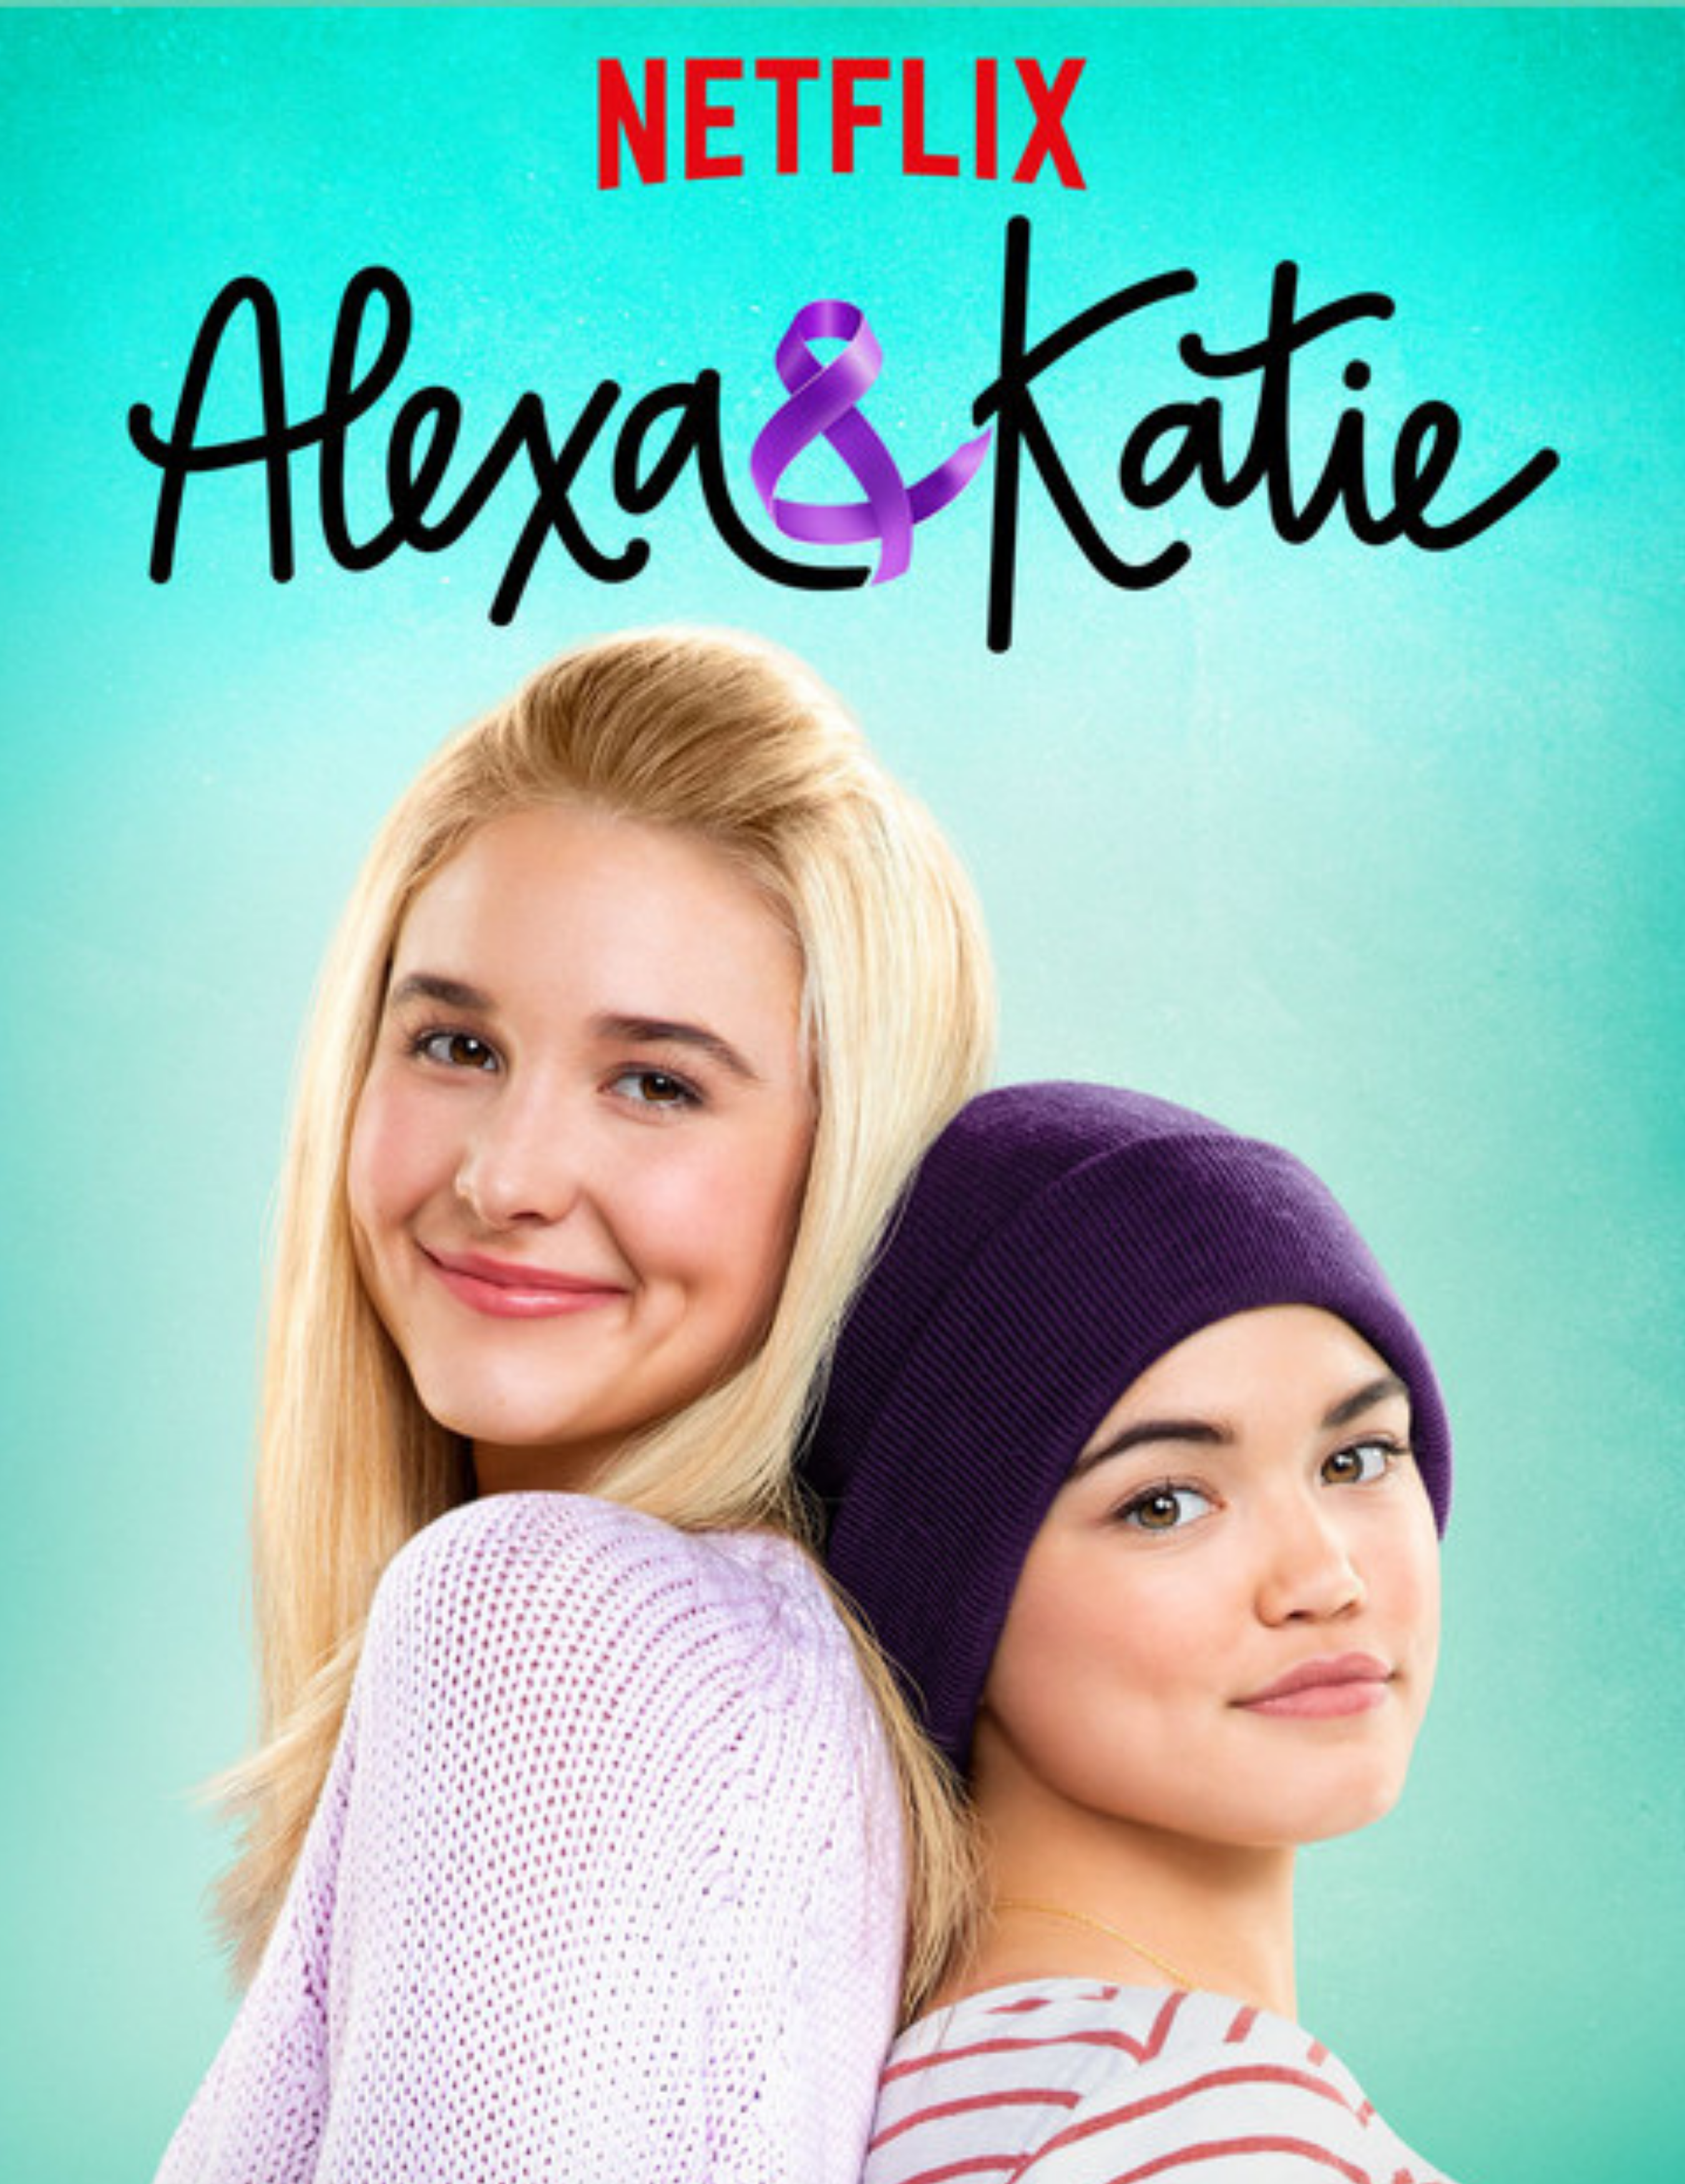 Alexa and Katie